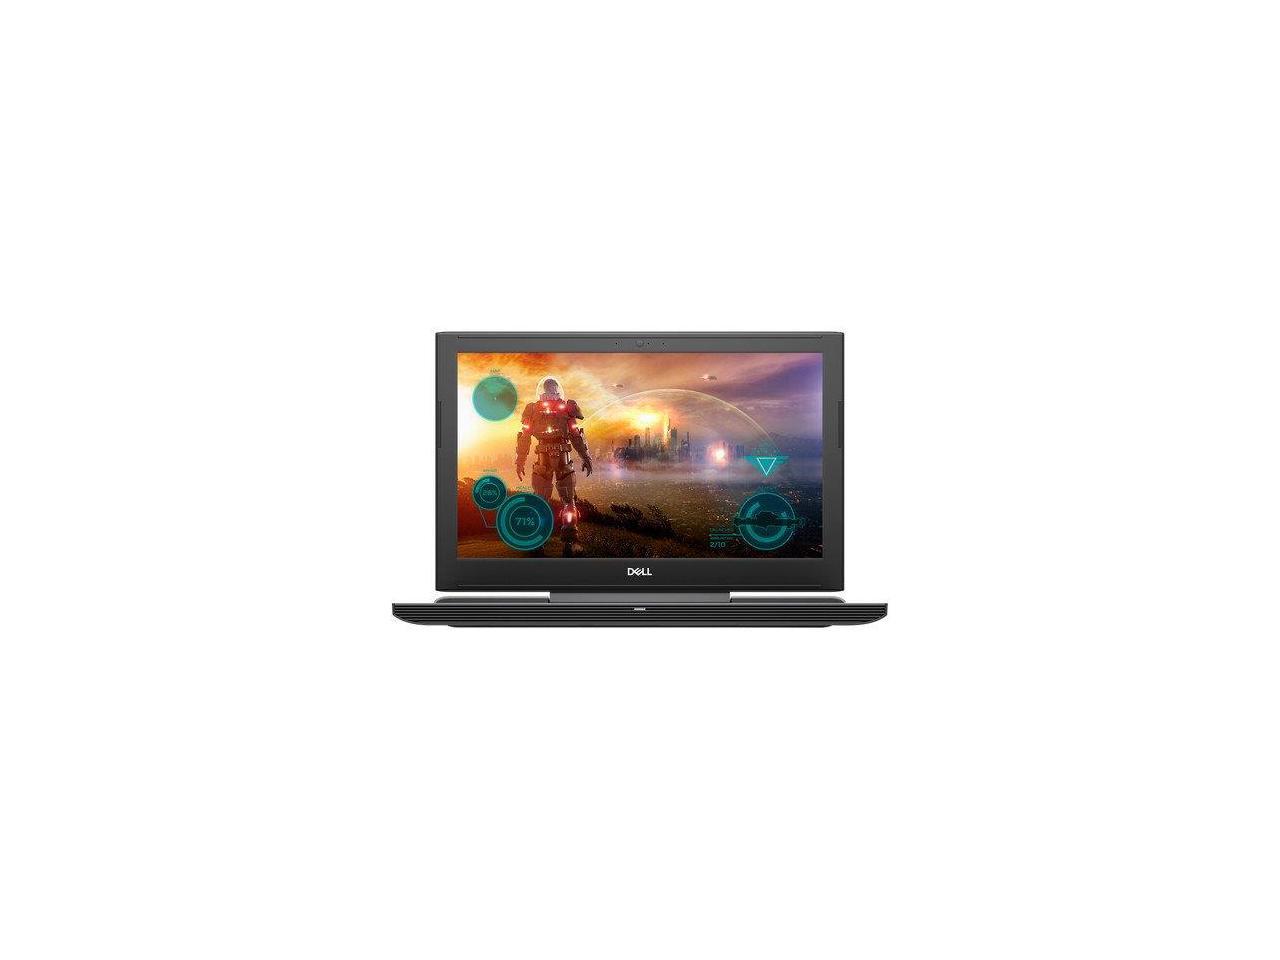 Dell Inspiron 7000 15.6" IPS FHD Gaming Laptop | VR Ready | Intel Quad Core i5-7300HQ | 24GB RAM 512GB SSD 500GB HDD | NVIDIA GeForce GTX 1060 6GB GDDR5 | Windows 10 Black